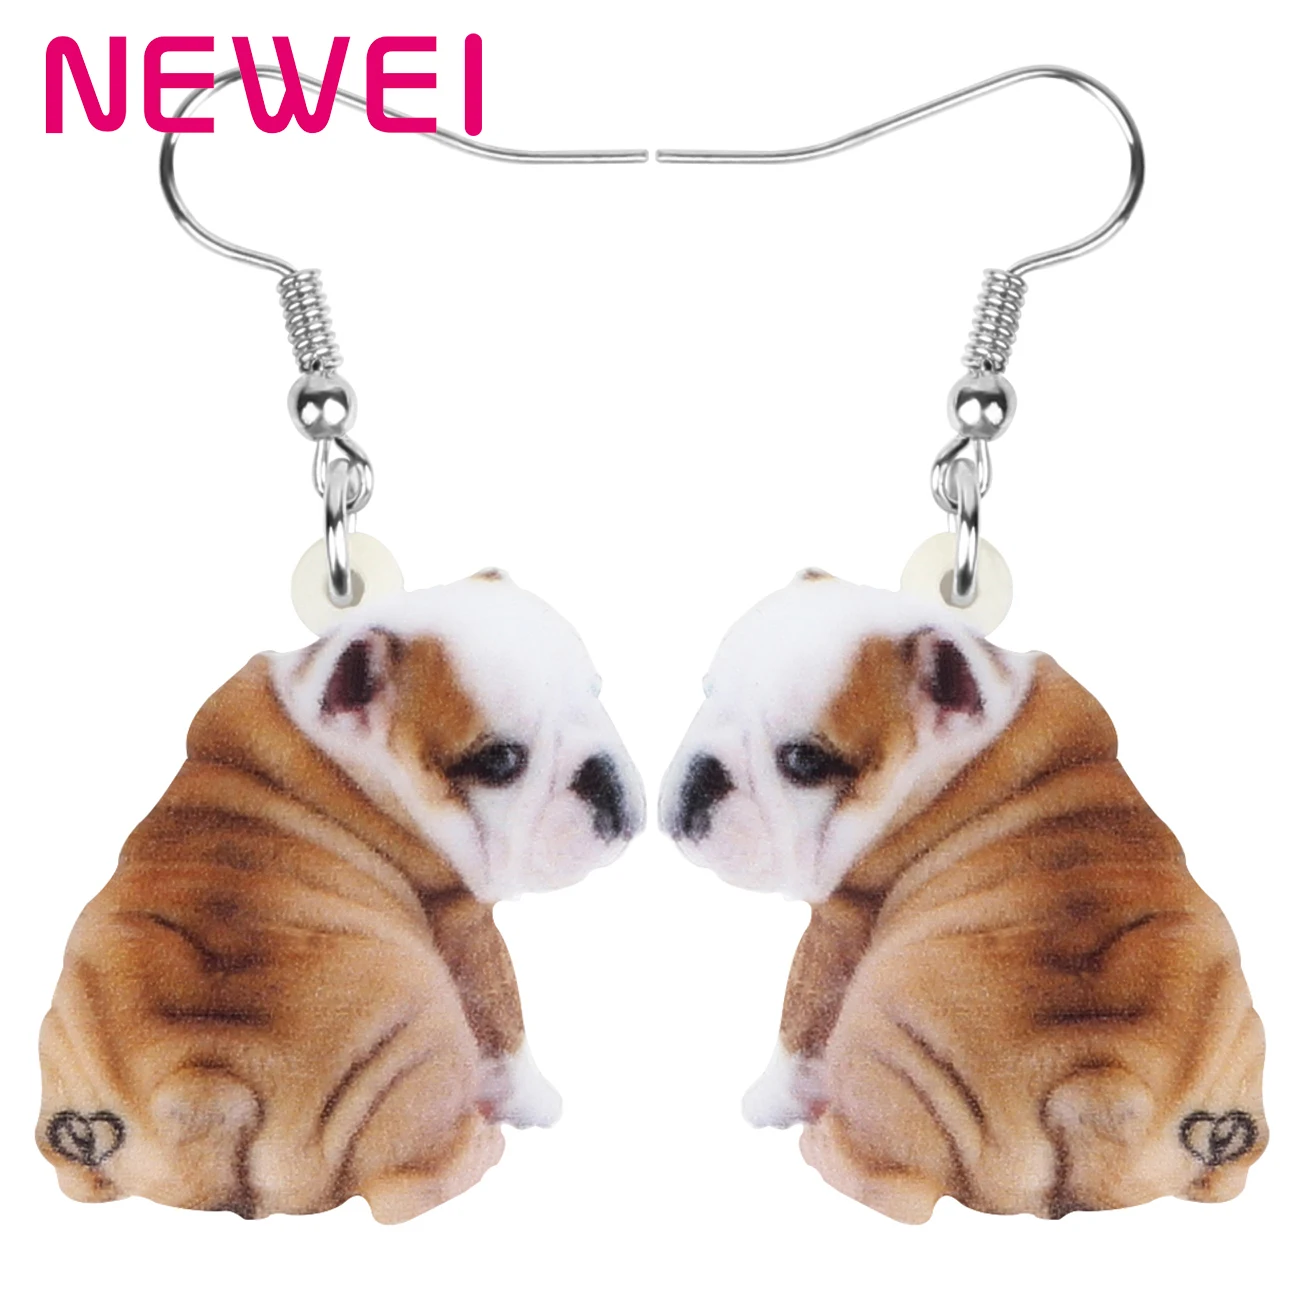 

Acrylic Sweet Sitting Shar Pei Dog Earrings Pets Drop Dangle Fashion Animals Jewelry For Women Girls Kids Teens Charms Gifts, Brown